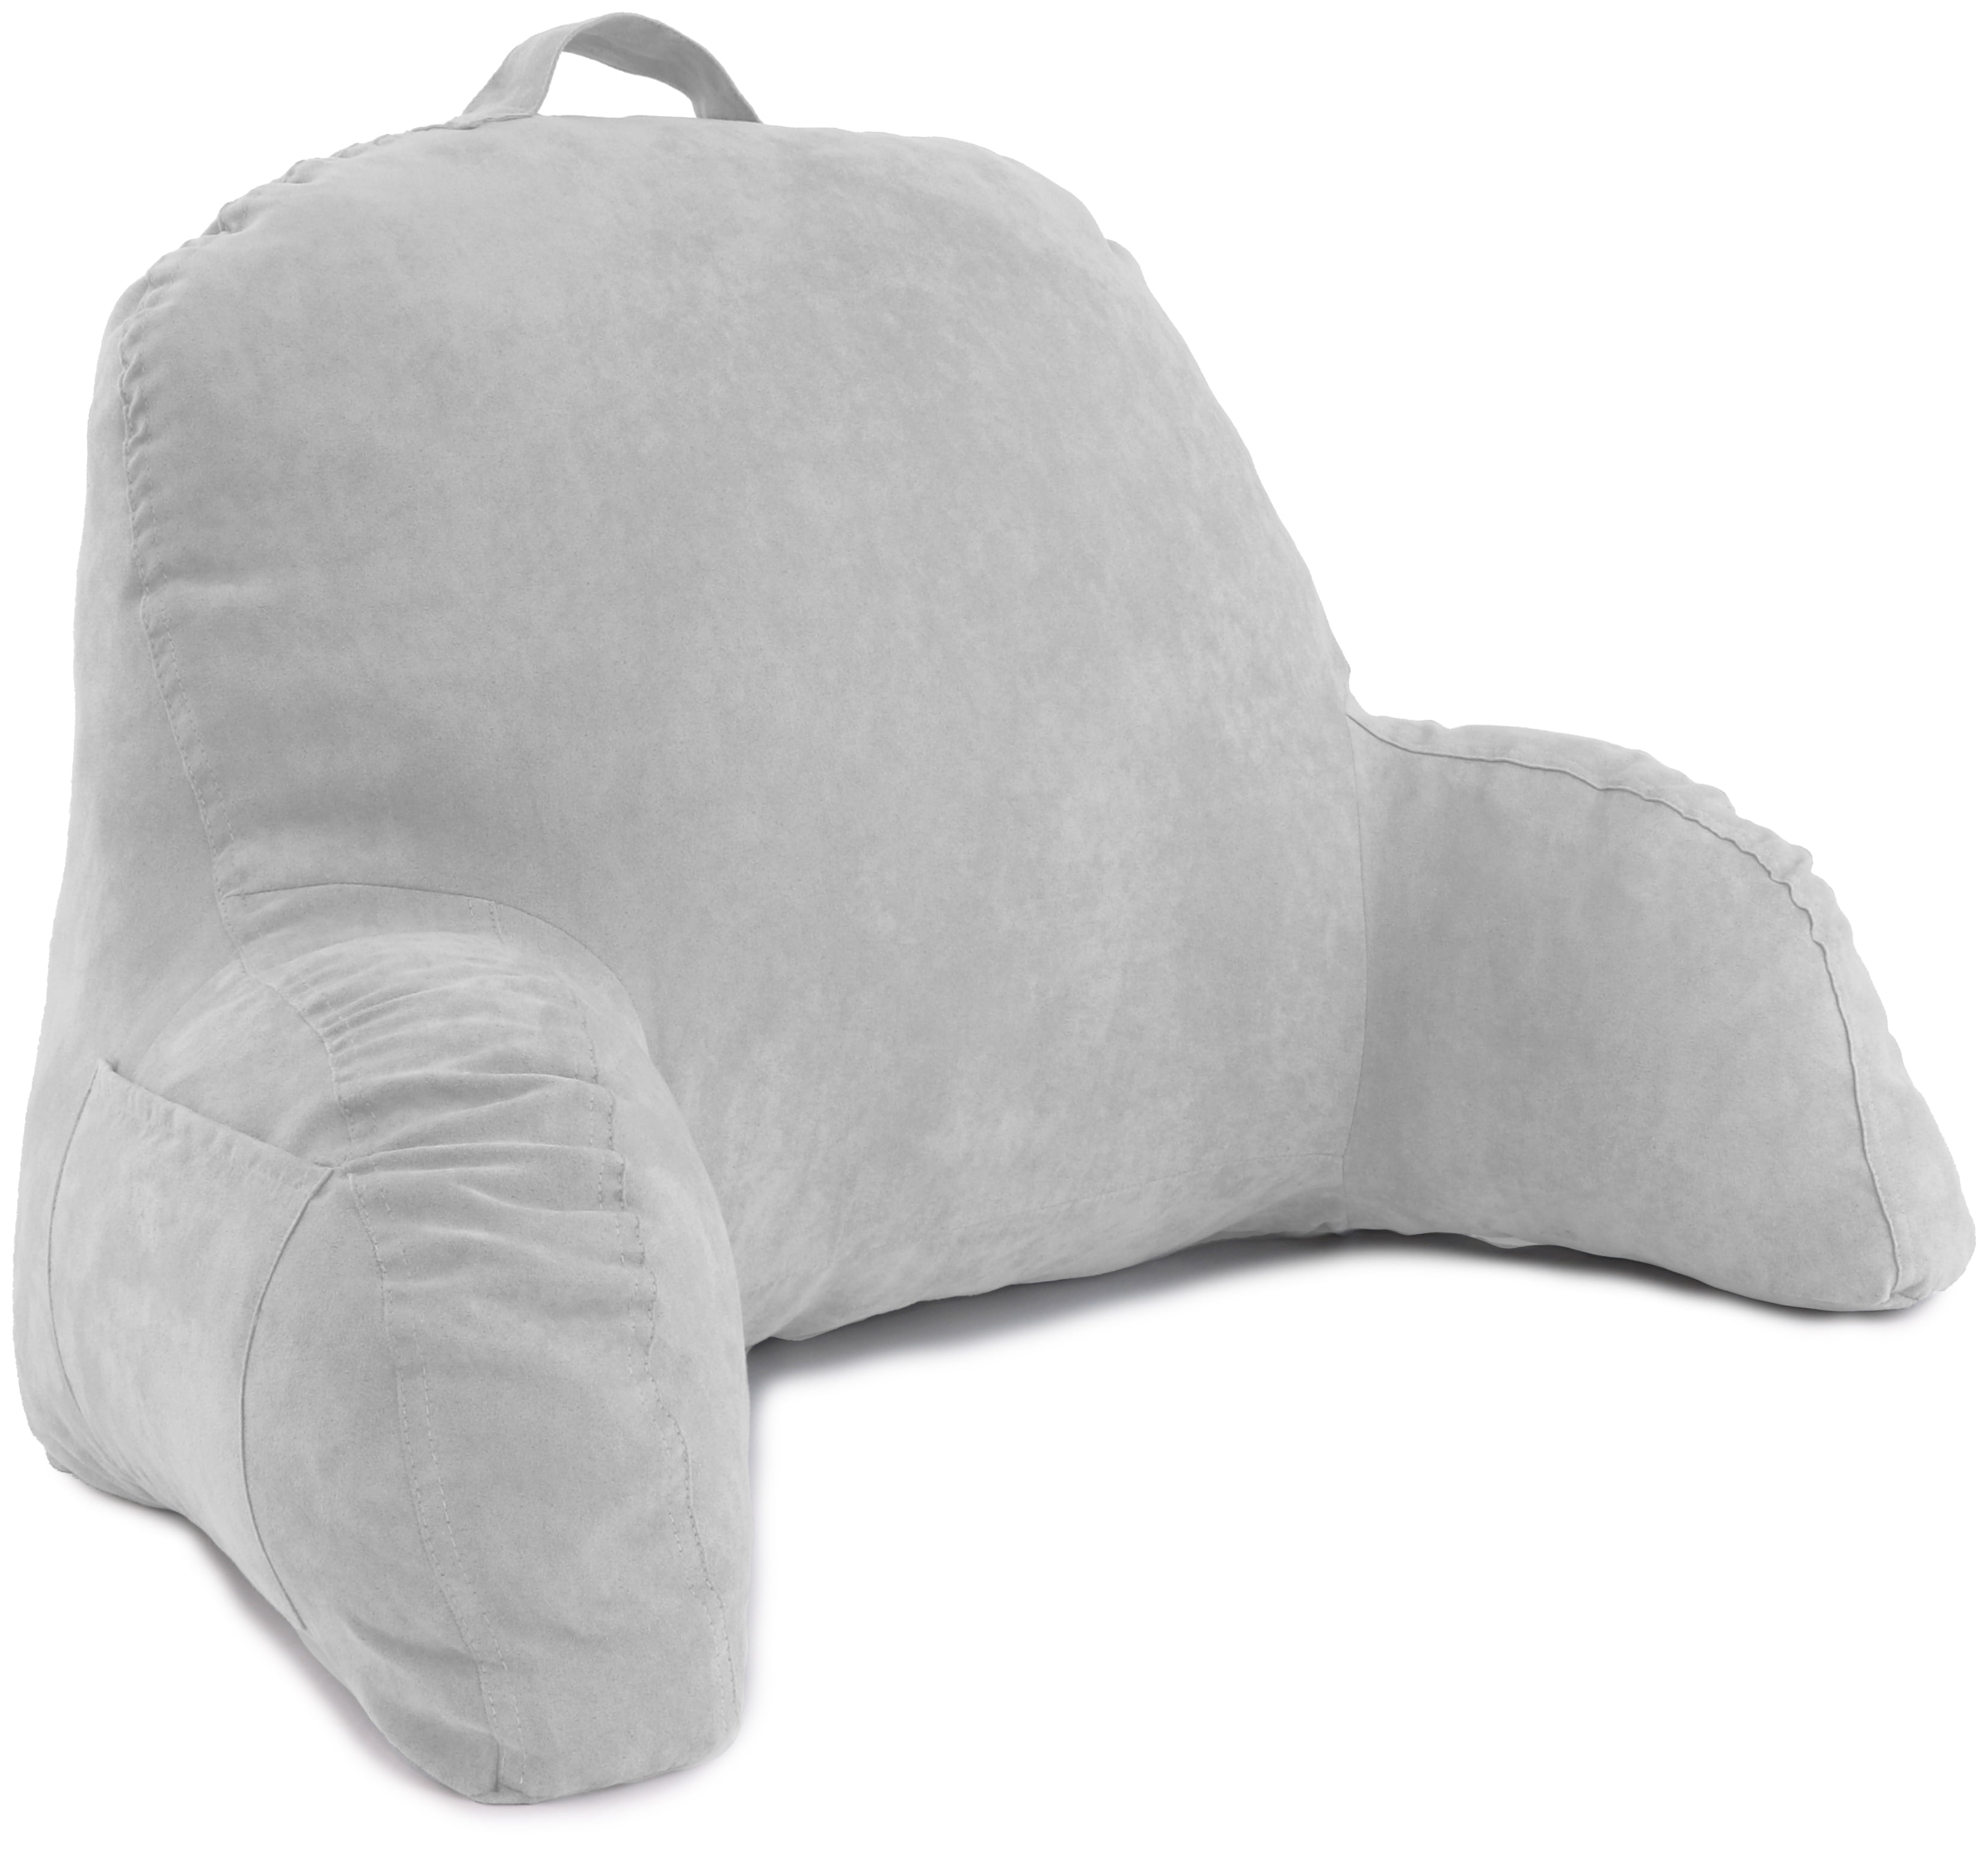 backrest pillow for chair